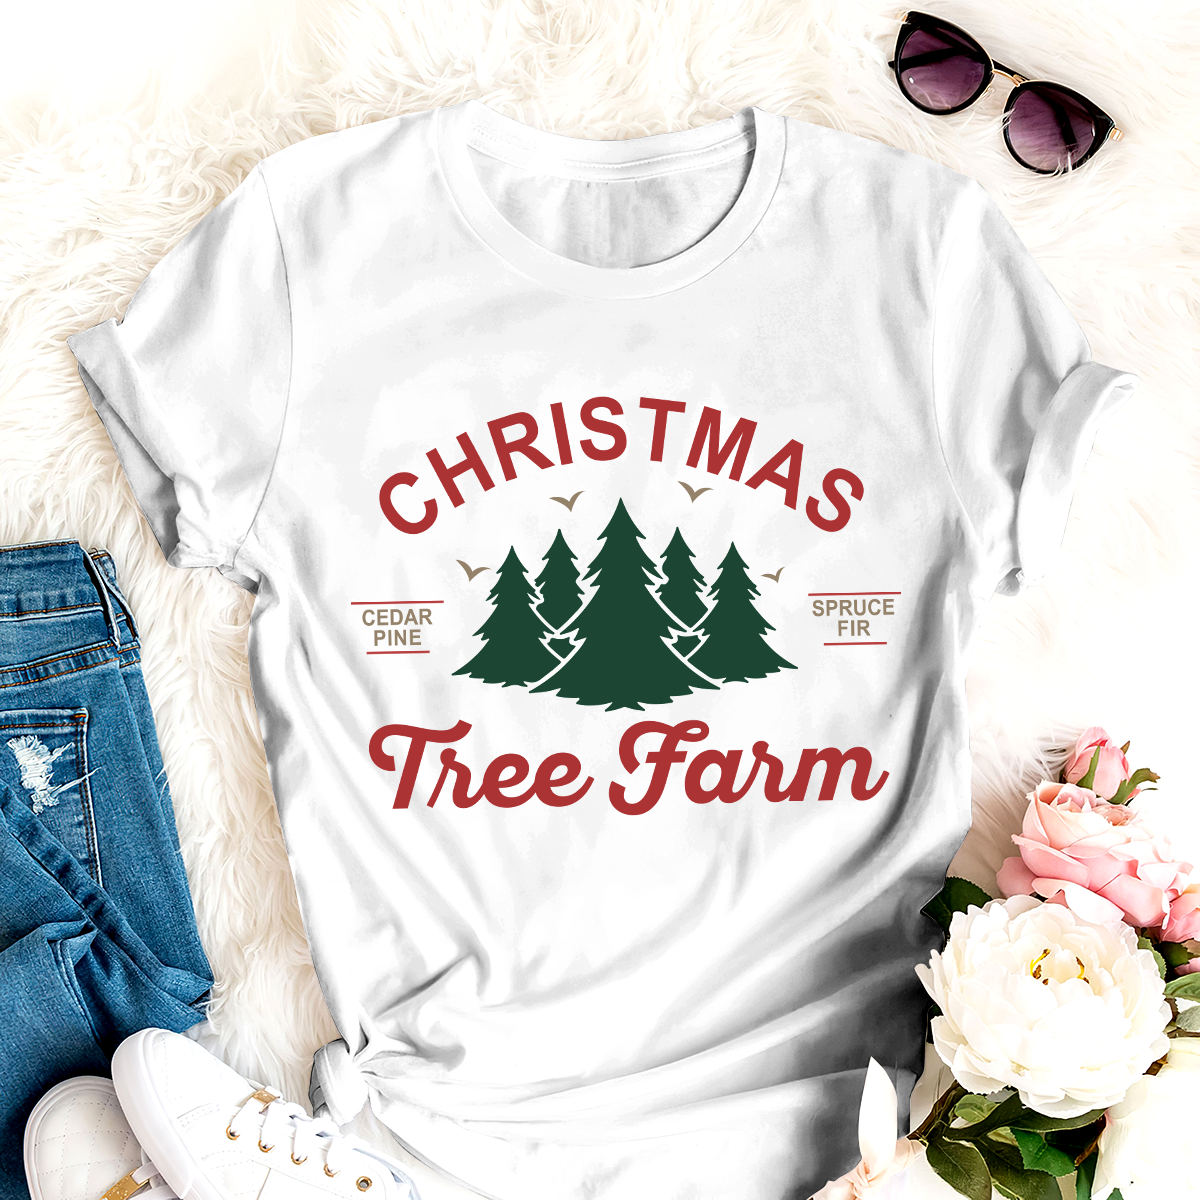 Christmas Tree Farm Orifinal T-Shirt Best Gift For Friends